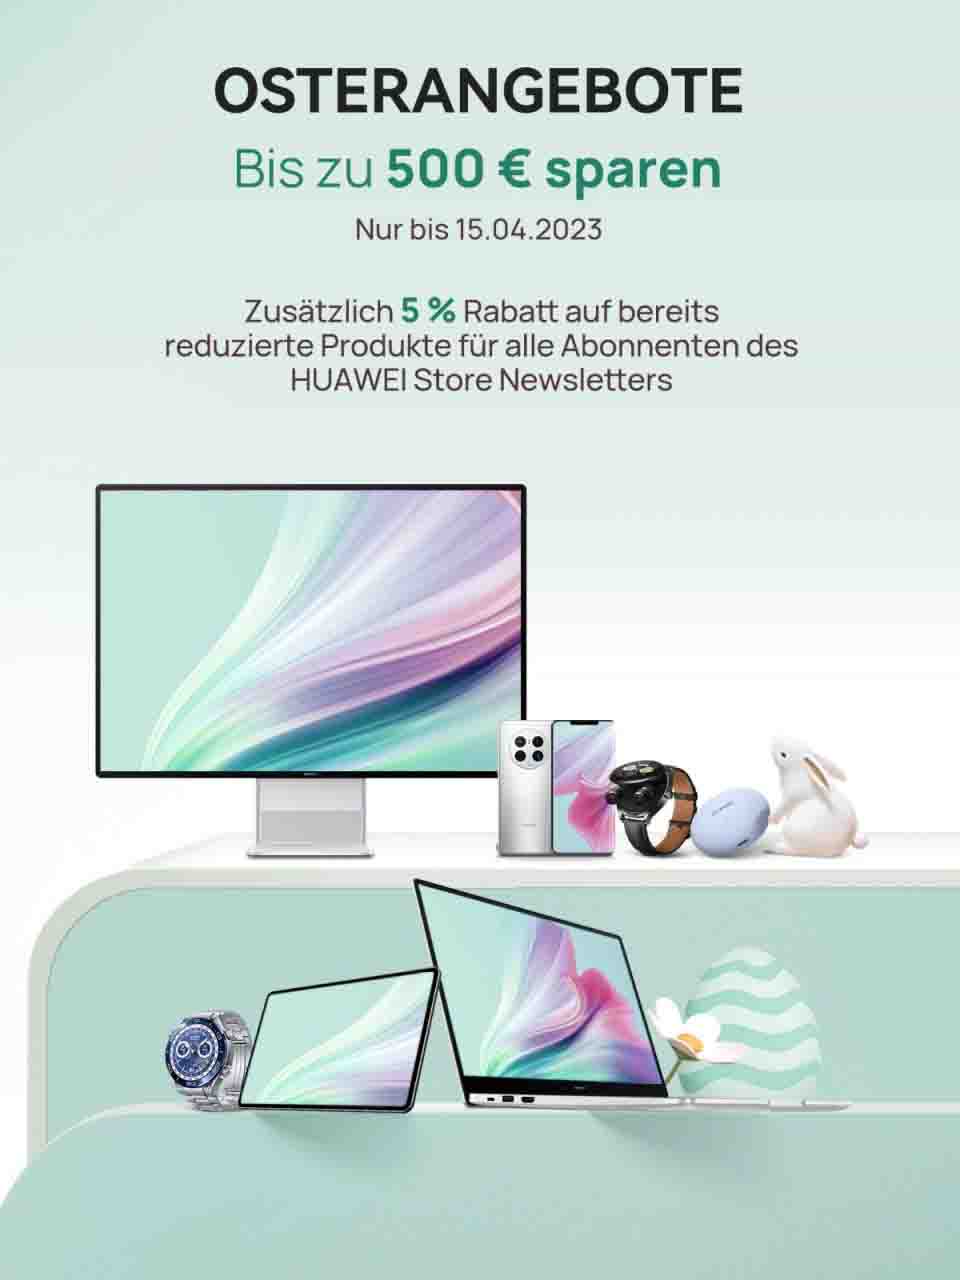 Huawei Germany €500 discount